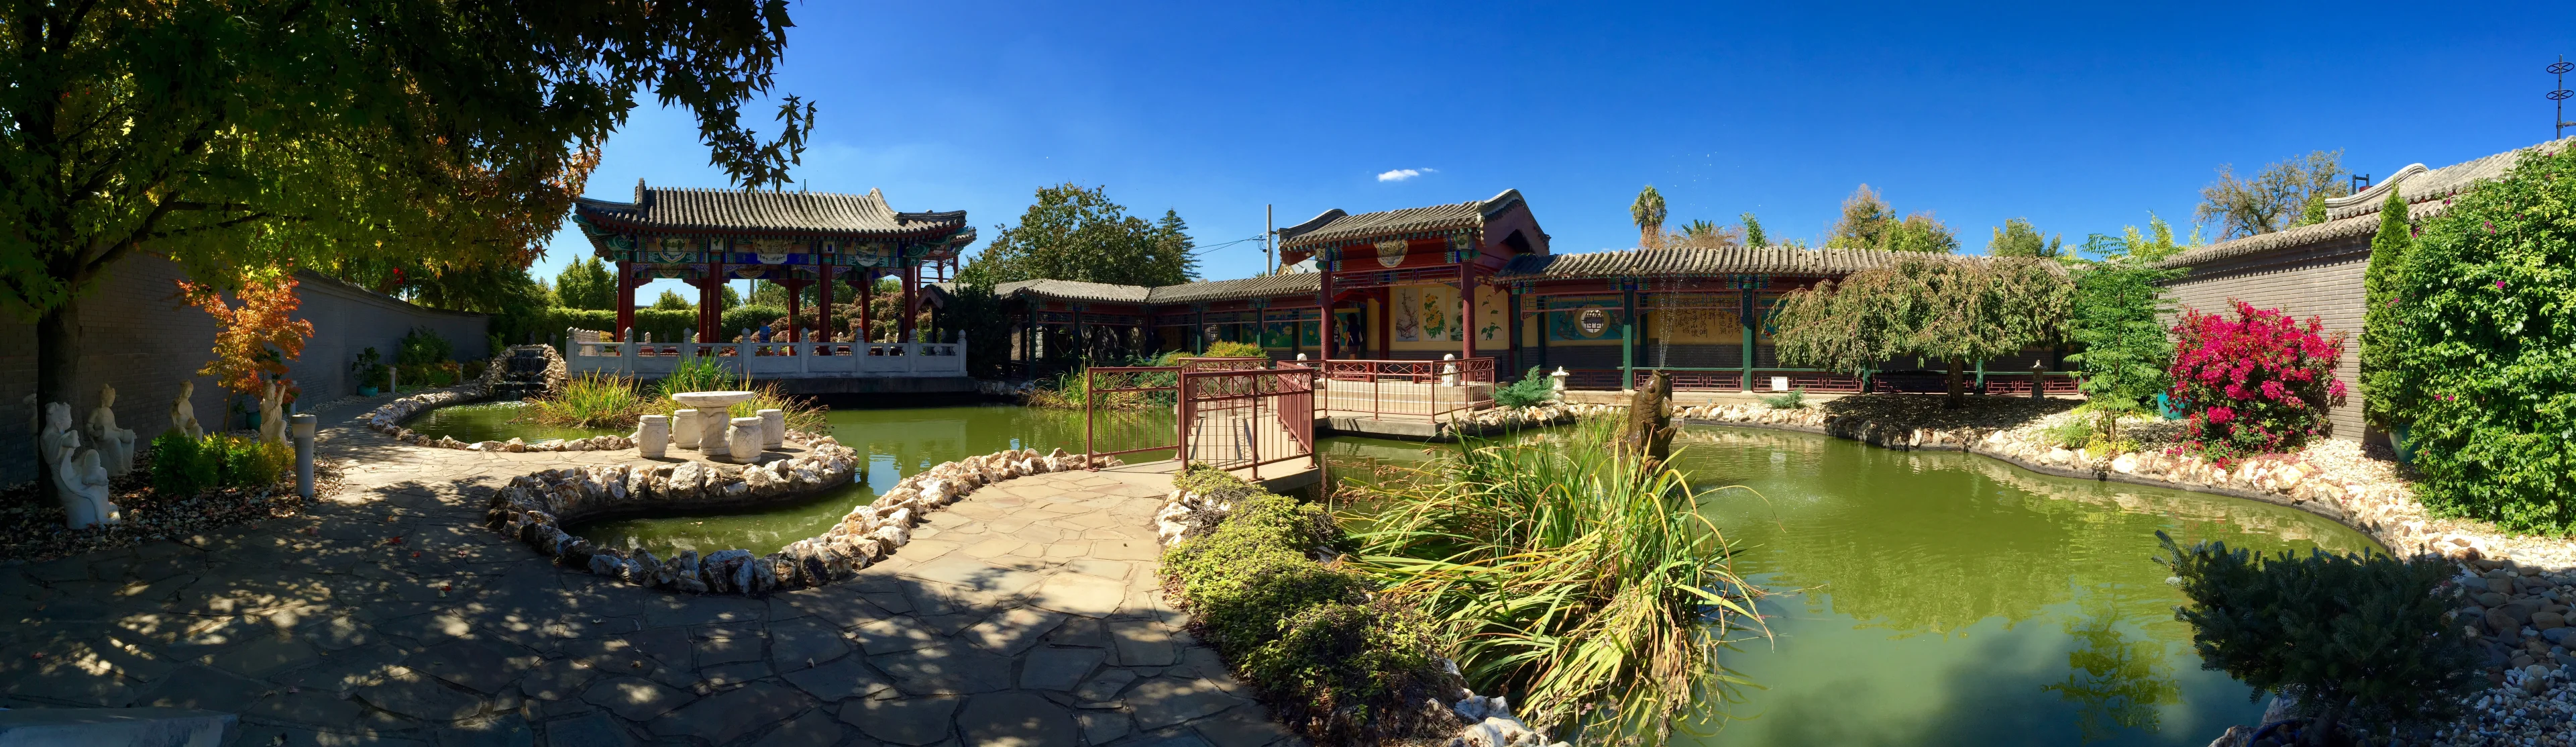 Chinese gardens at the Golden Dragon Museum in Bendigo, Victoria.